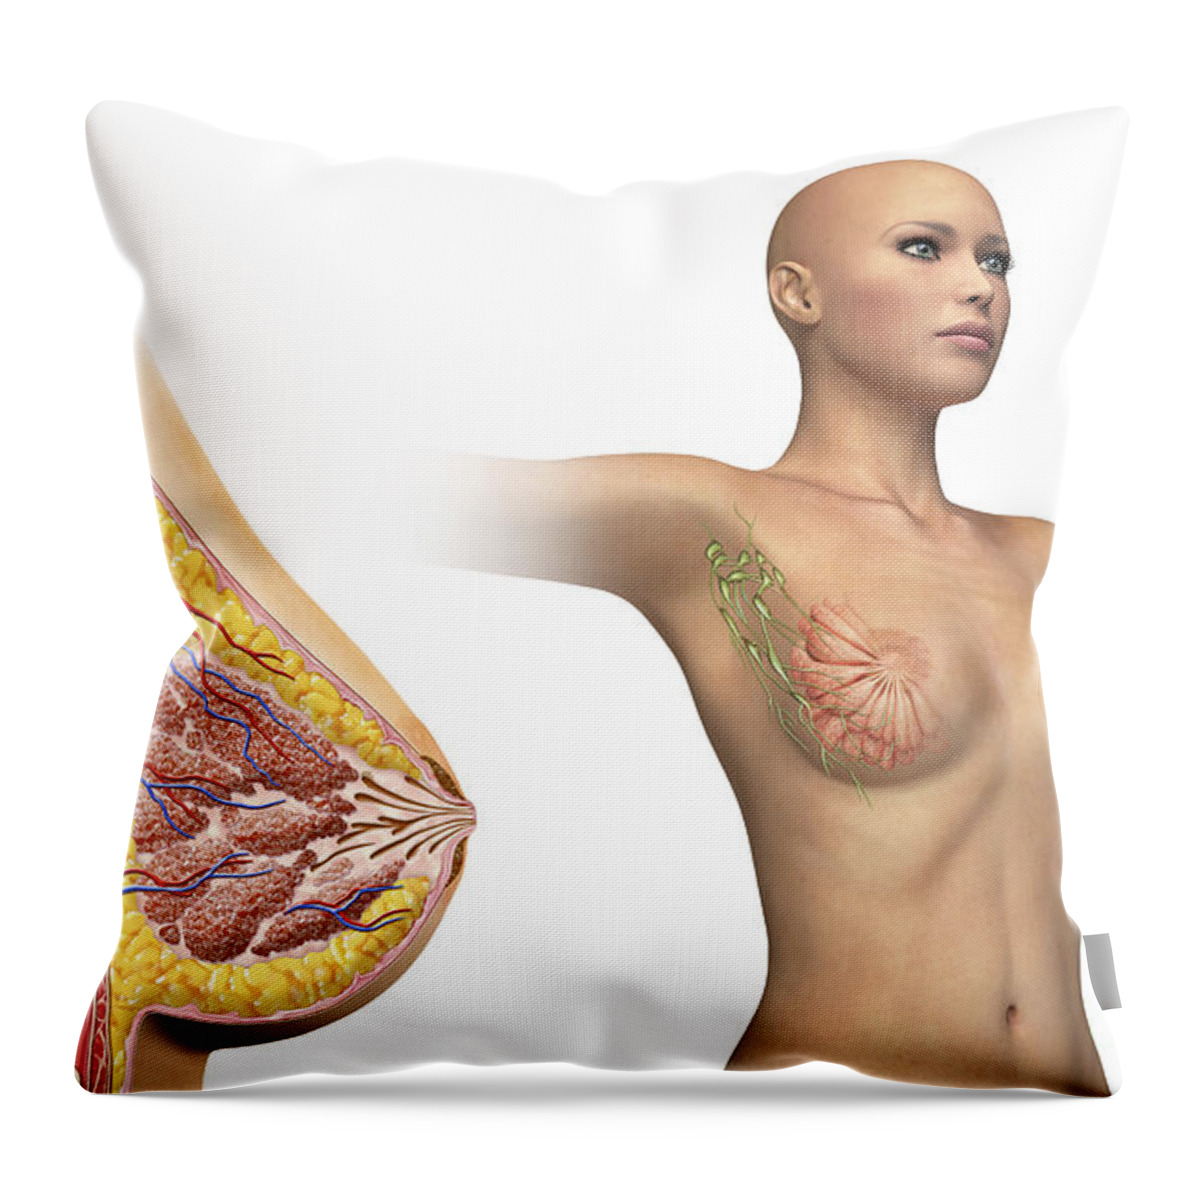 Anatomy Of Female Body With Internal Digital Art by Leonello Calvetti -  Fine Art America